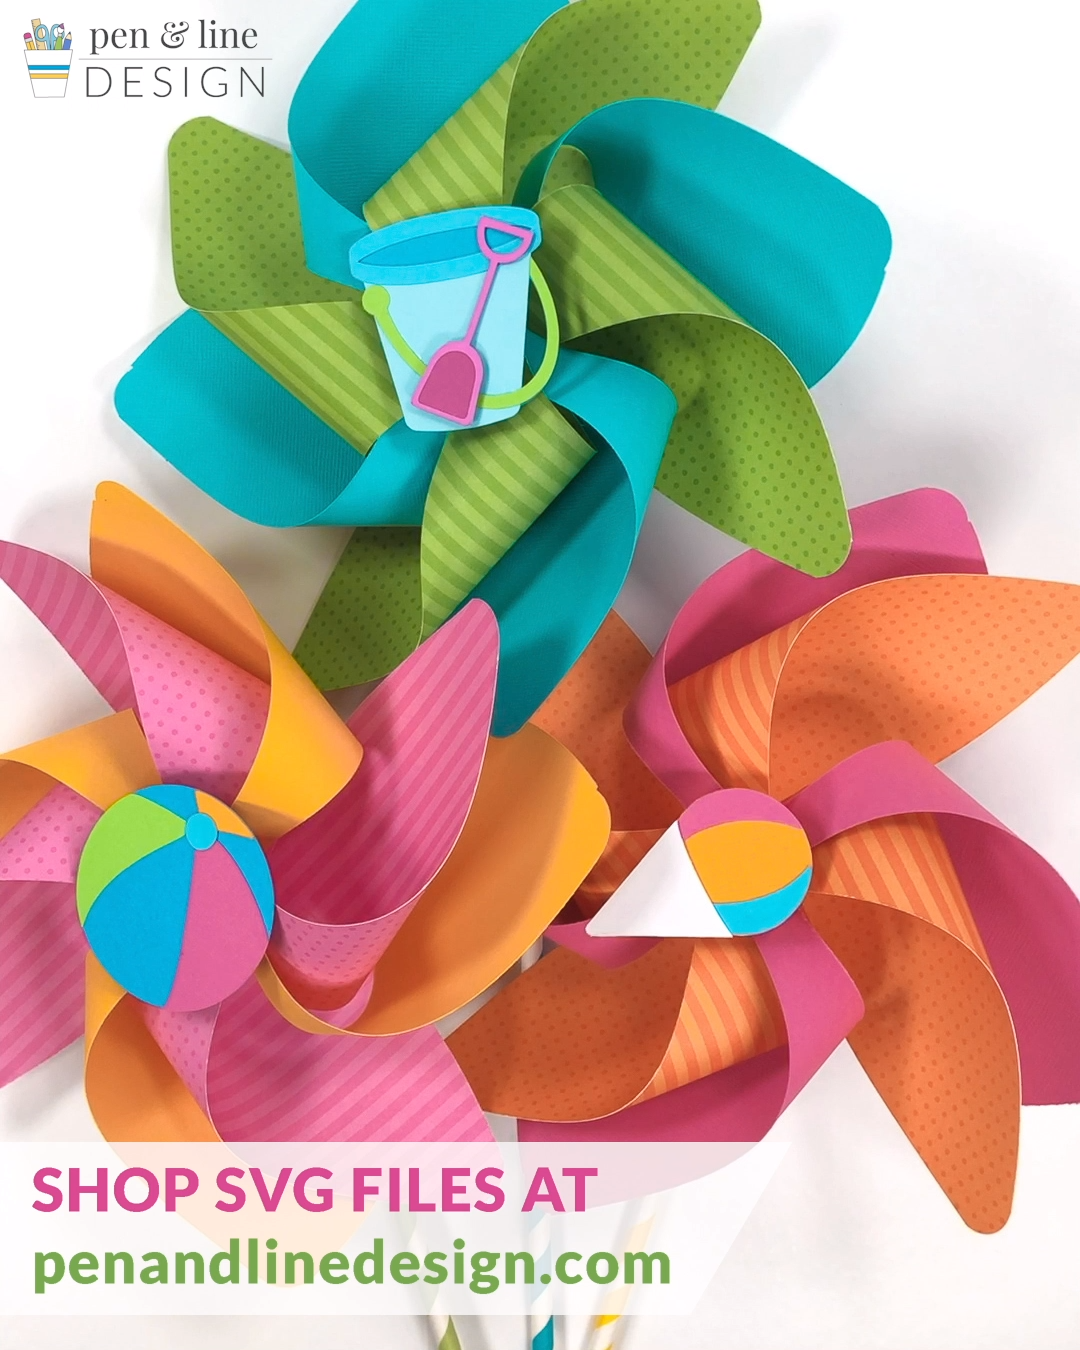 How to make pinwheels with Summer SVG Images - DIY Paper Craft - Pen & Line Design - How to make pinwheels with Summer SVG Images - DIY Paper Craft - Pen & Line Design -   16 quick diy Crafts ideas